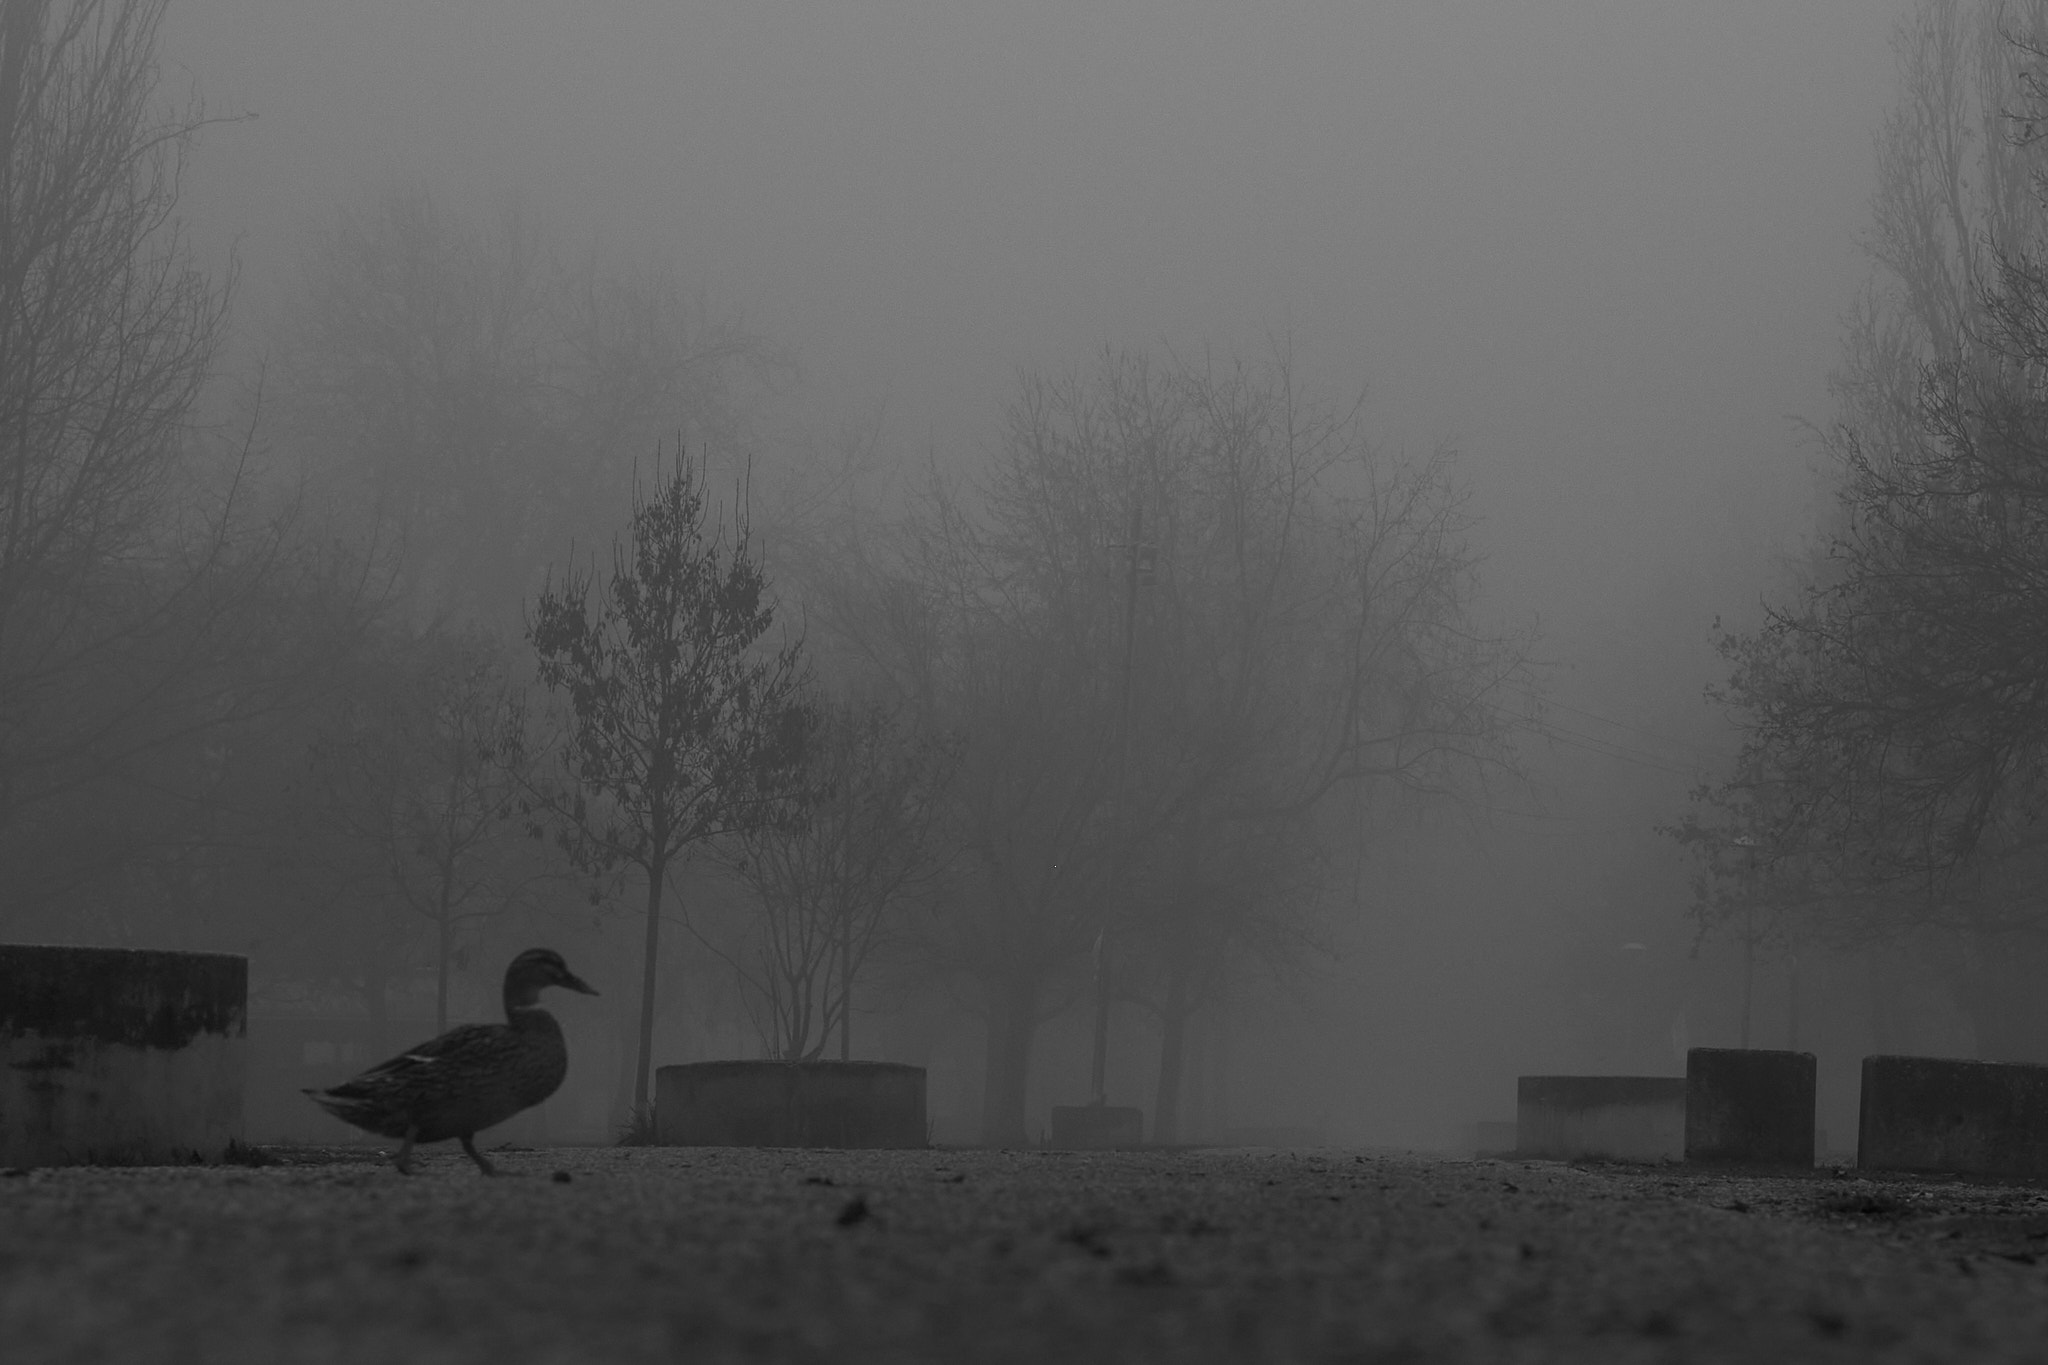 Alone in the fog...